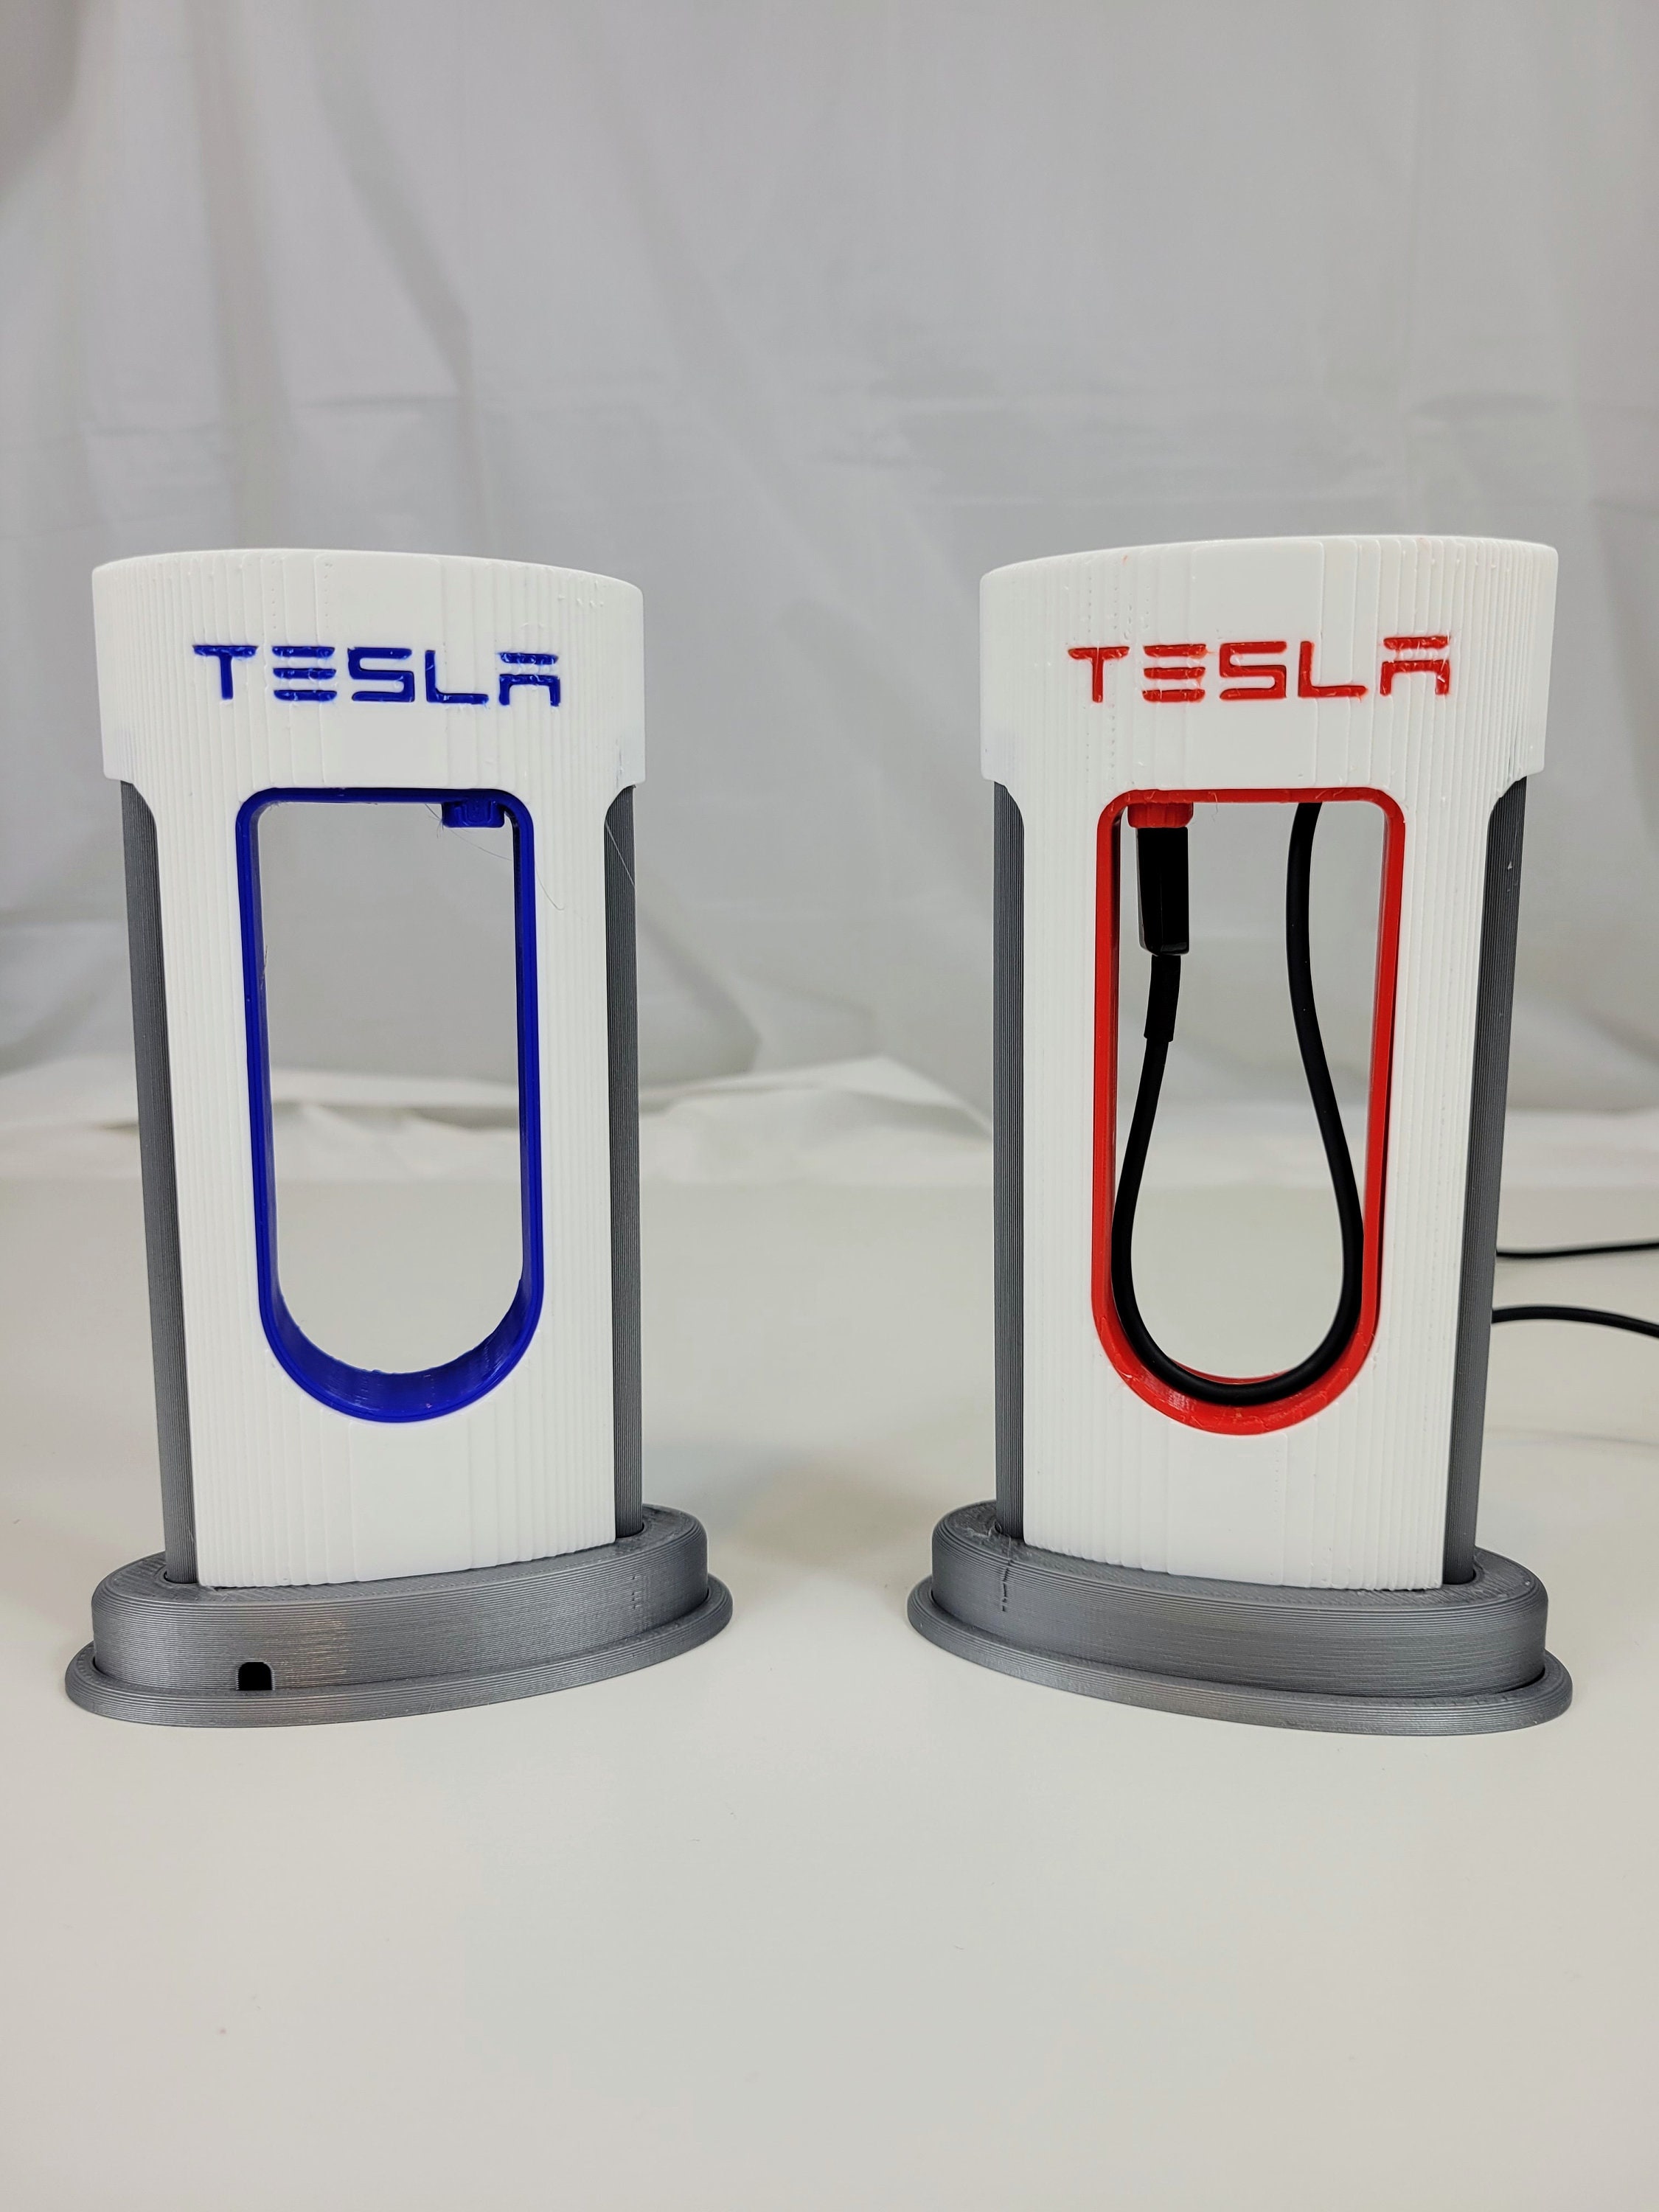 Supercharger Tesla Ladestation - Kostenloses Foto auf Pixabay